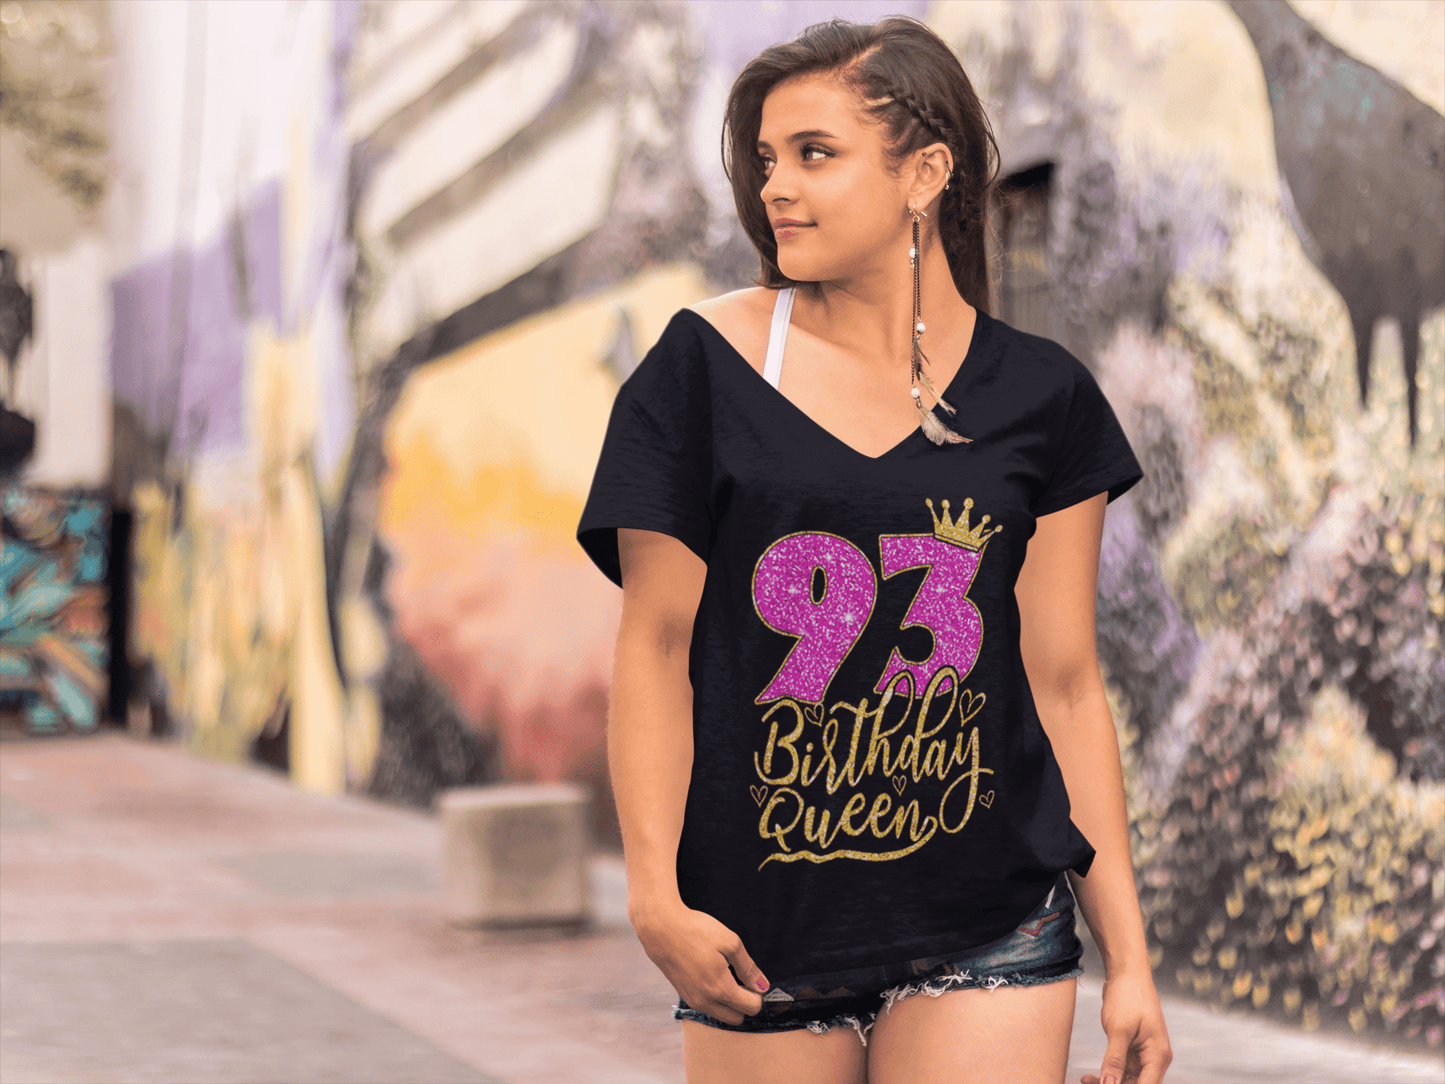 ULTRABASIC Women's T-Shirt 93rd Birthday Queen Shirt for Ladies - Novelty Gift